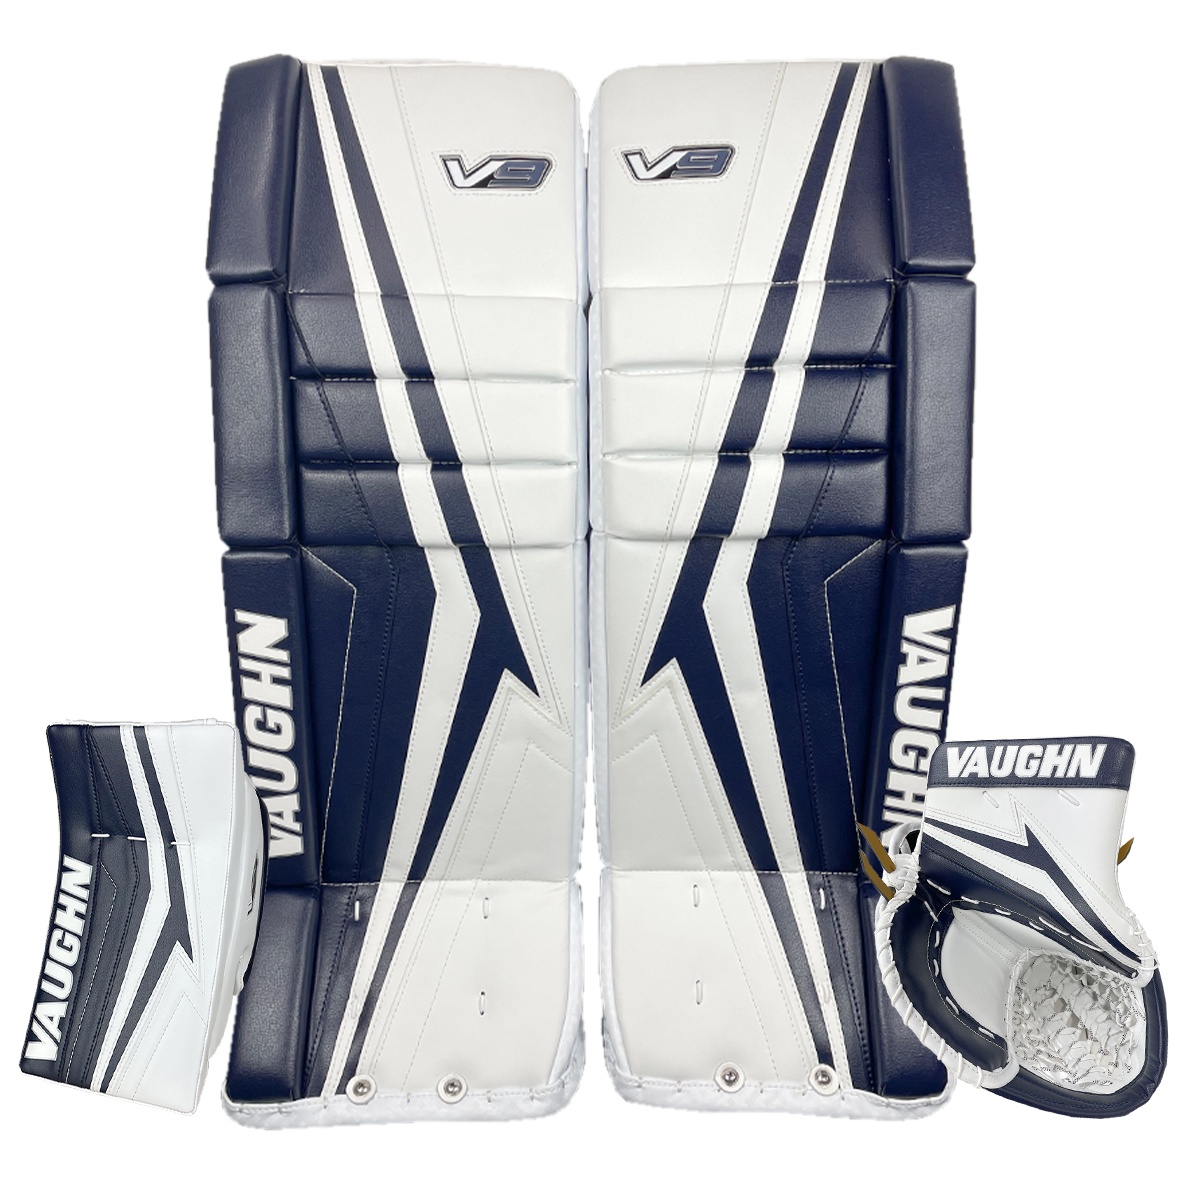 Vaughn Pro Custom - Used NCAA Pro Stock Goalie Pads (White/Blue